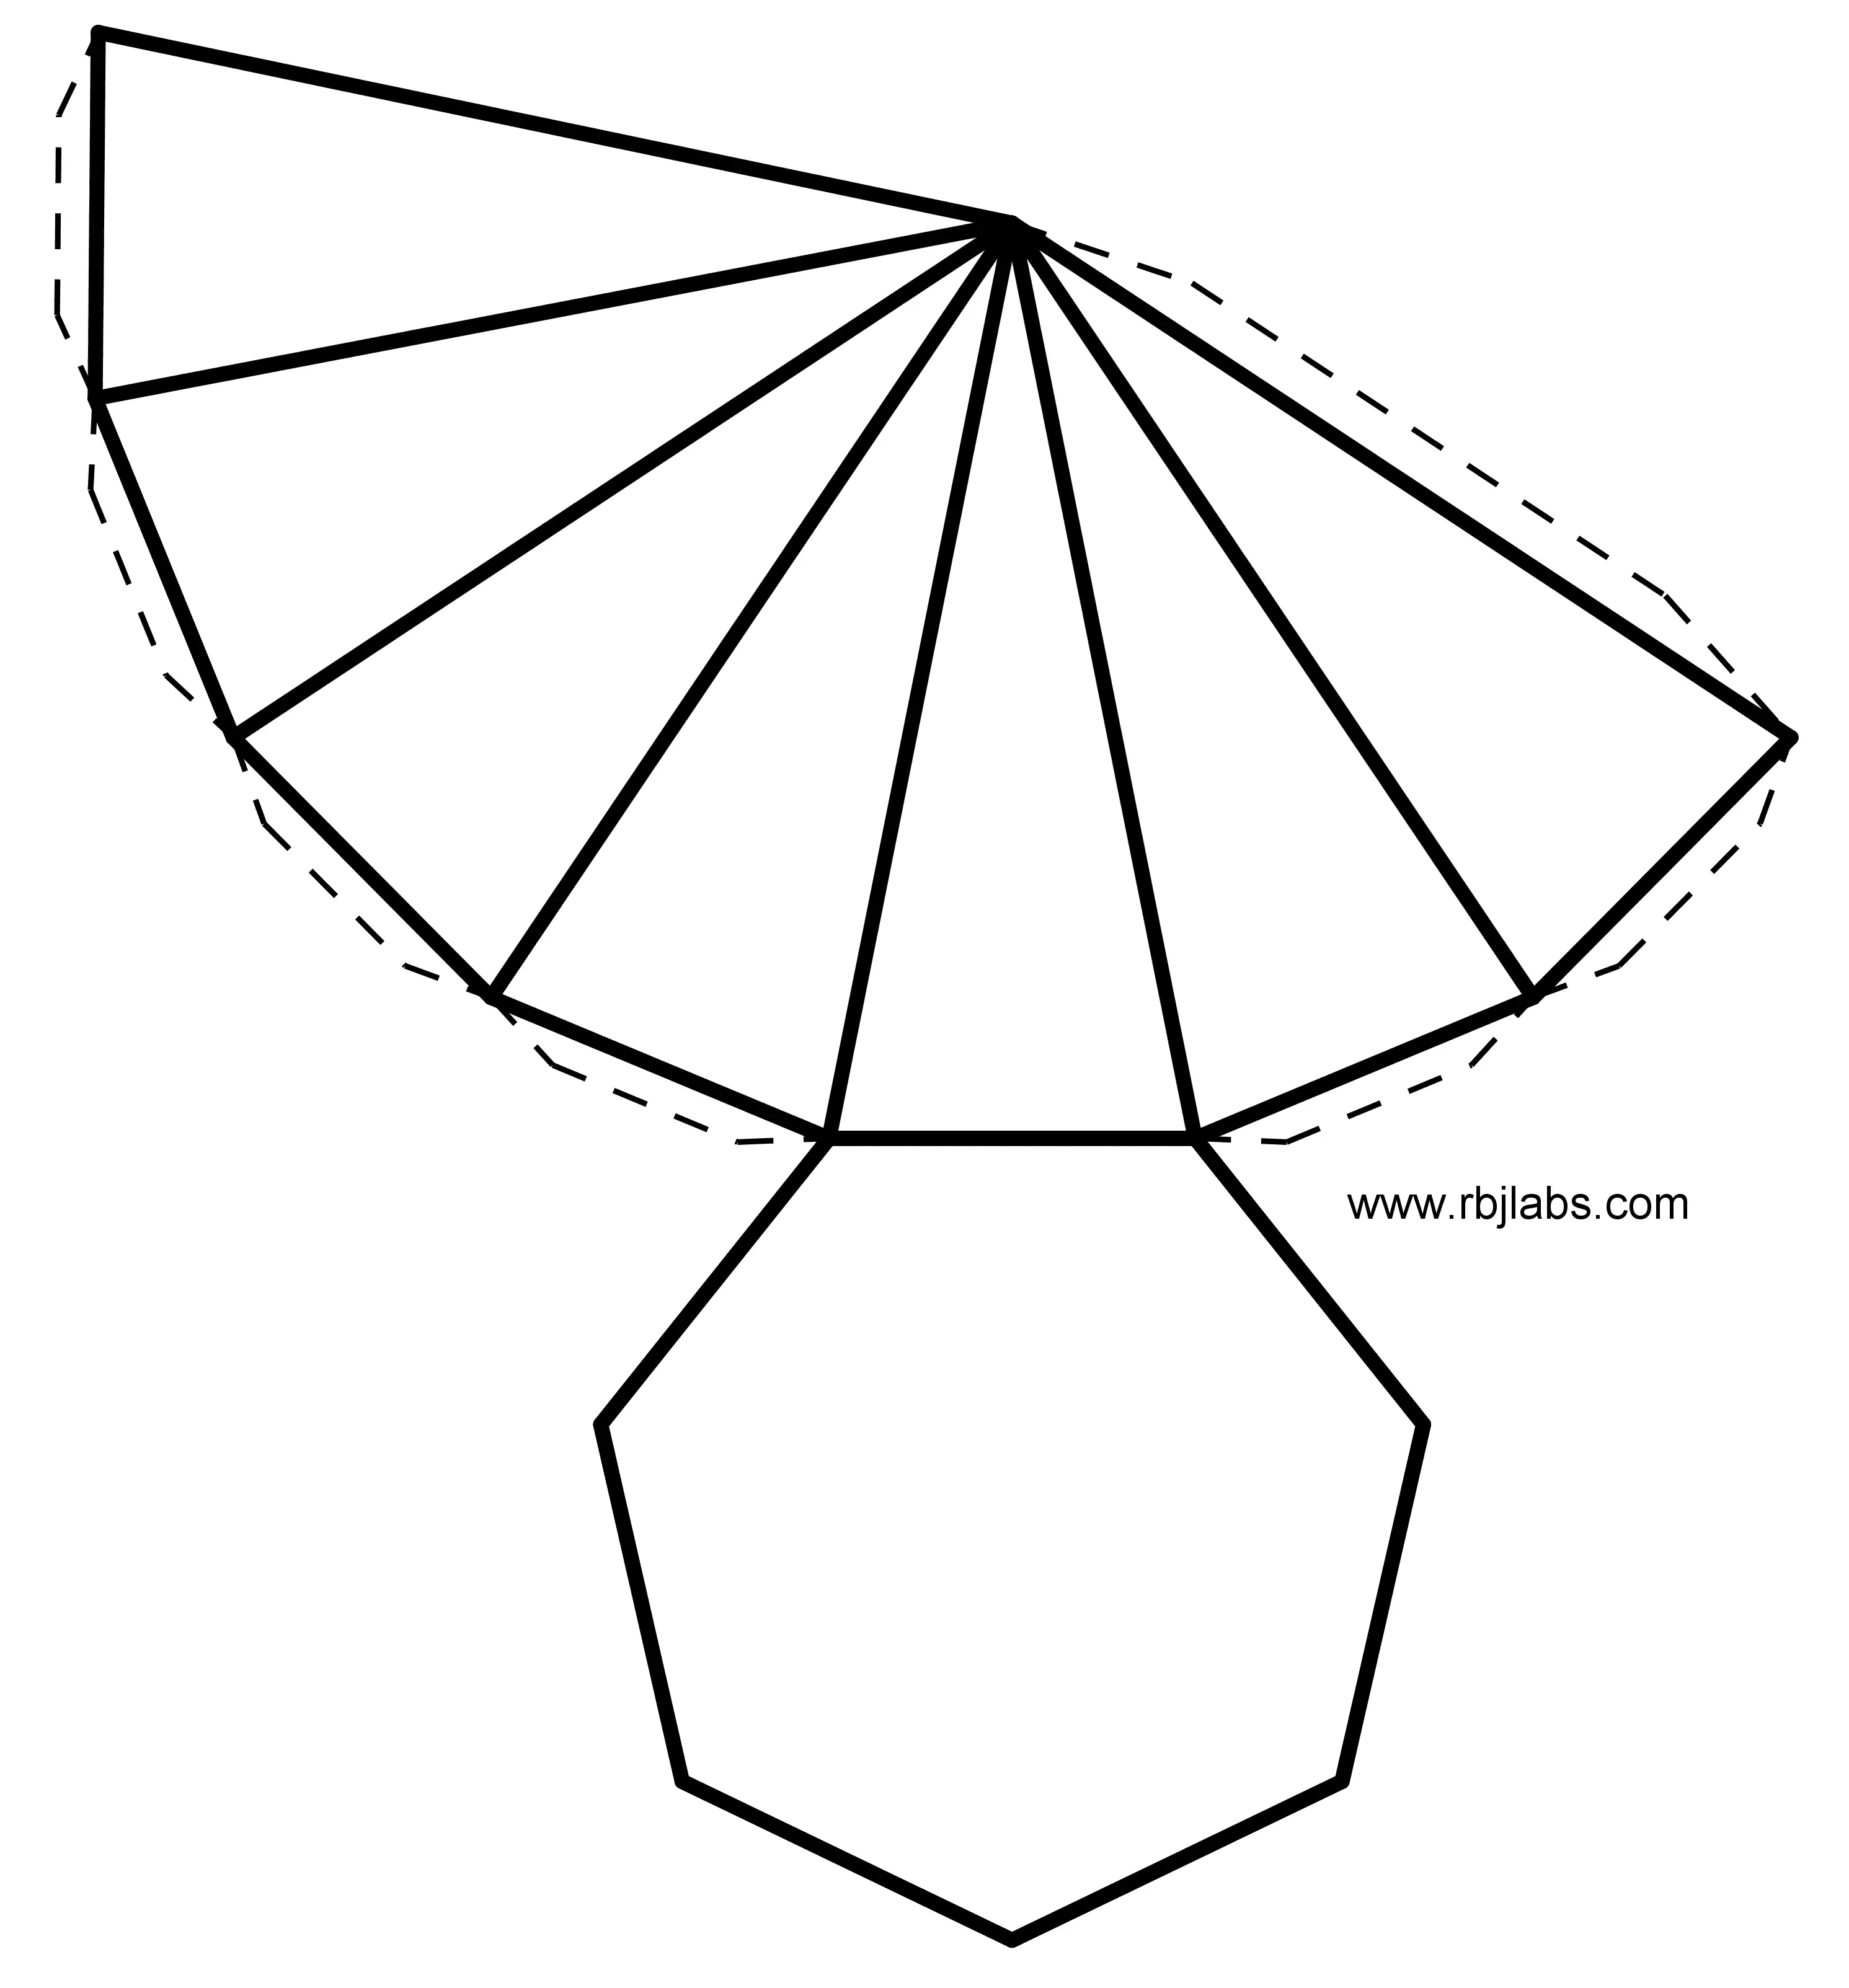 heptagonal pyramid